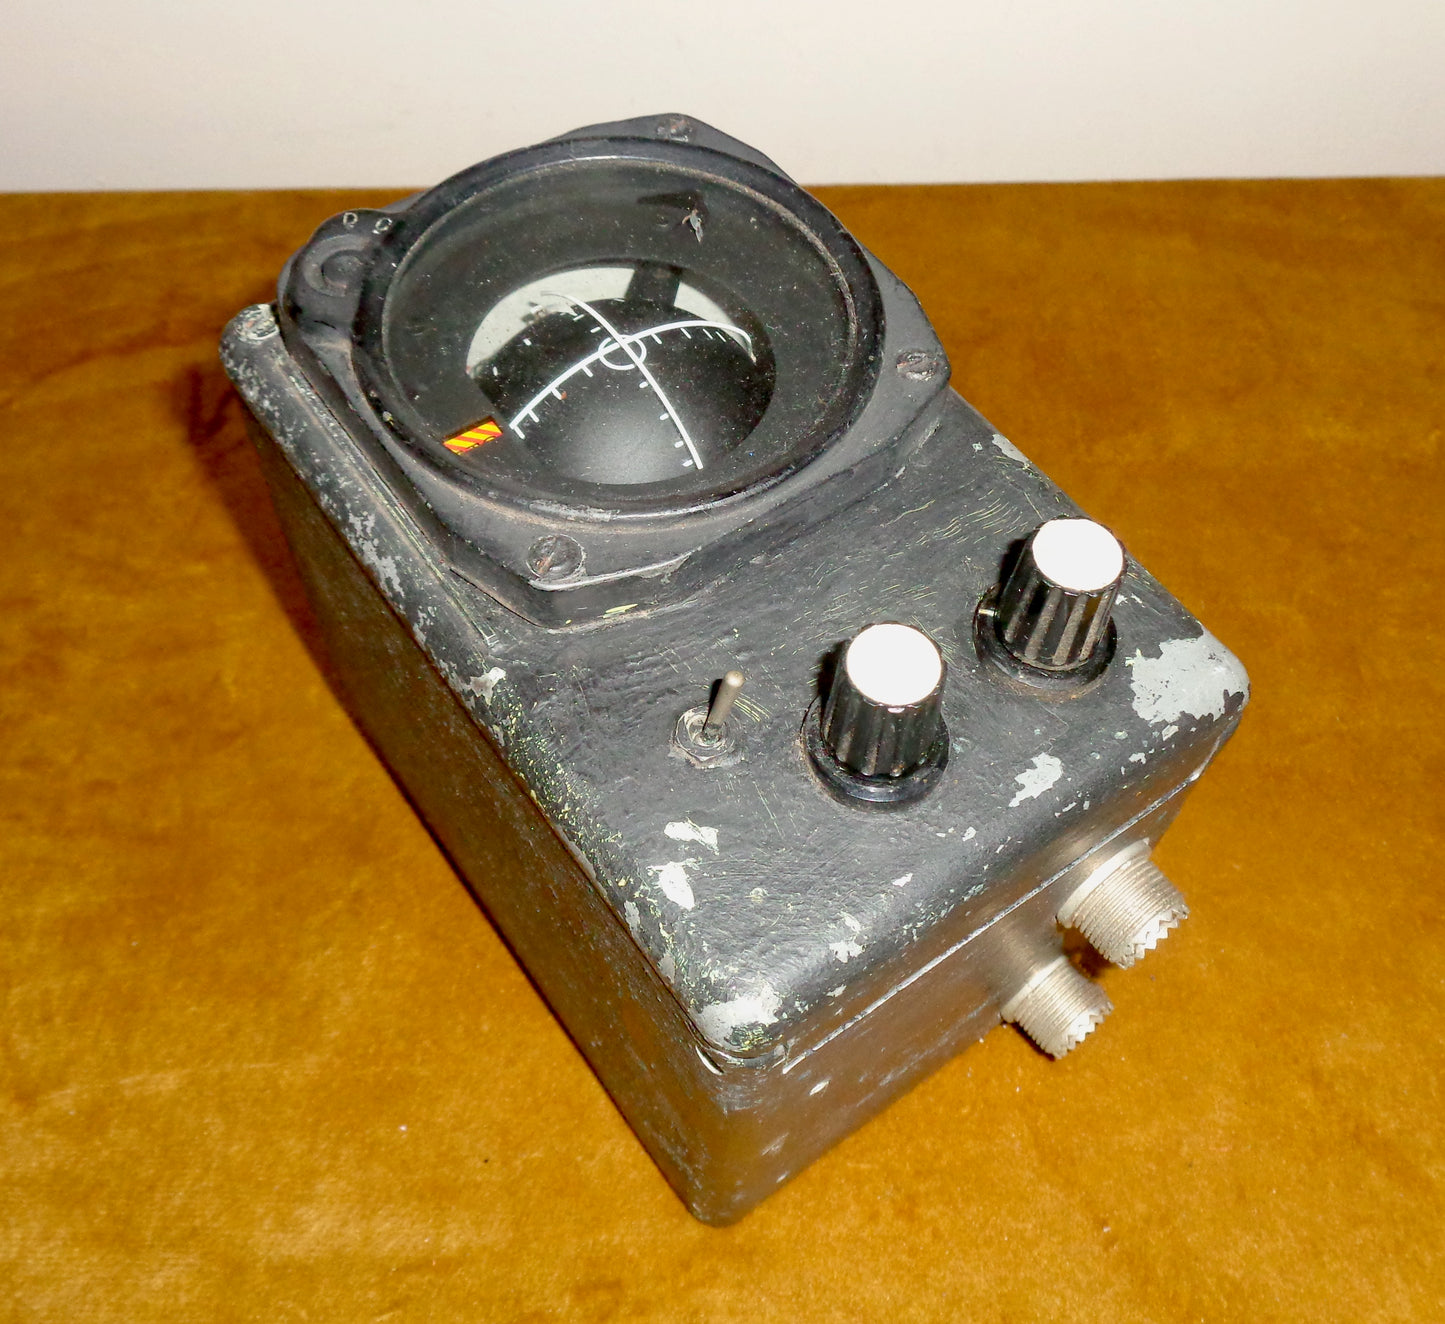 Vintage Attitude indicator Artificial Horizon Flight Instrument